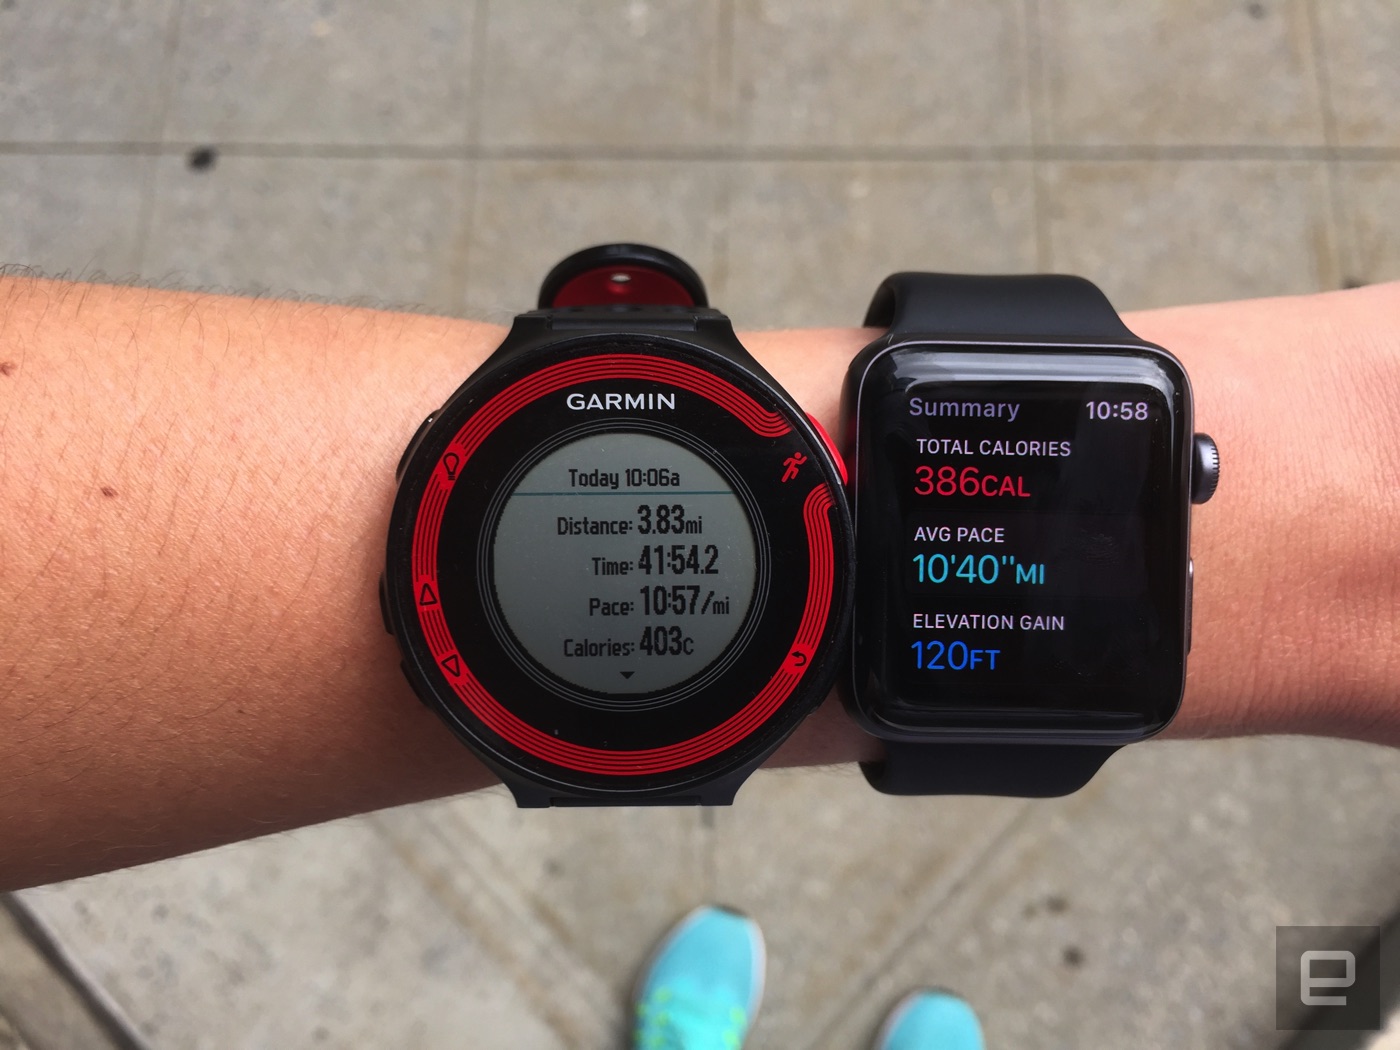 Apple Watch Series 2 review (as written by a marathoner)